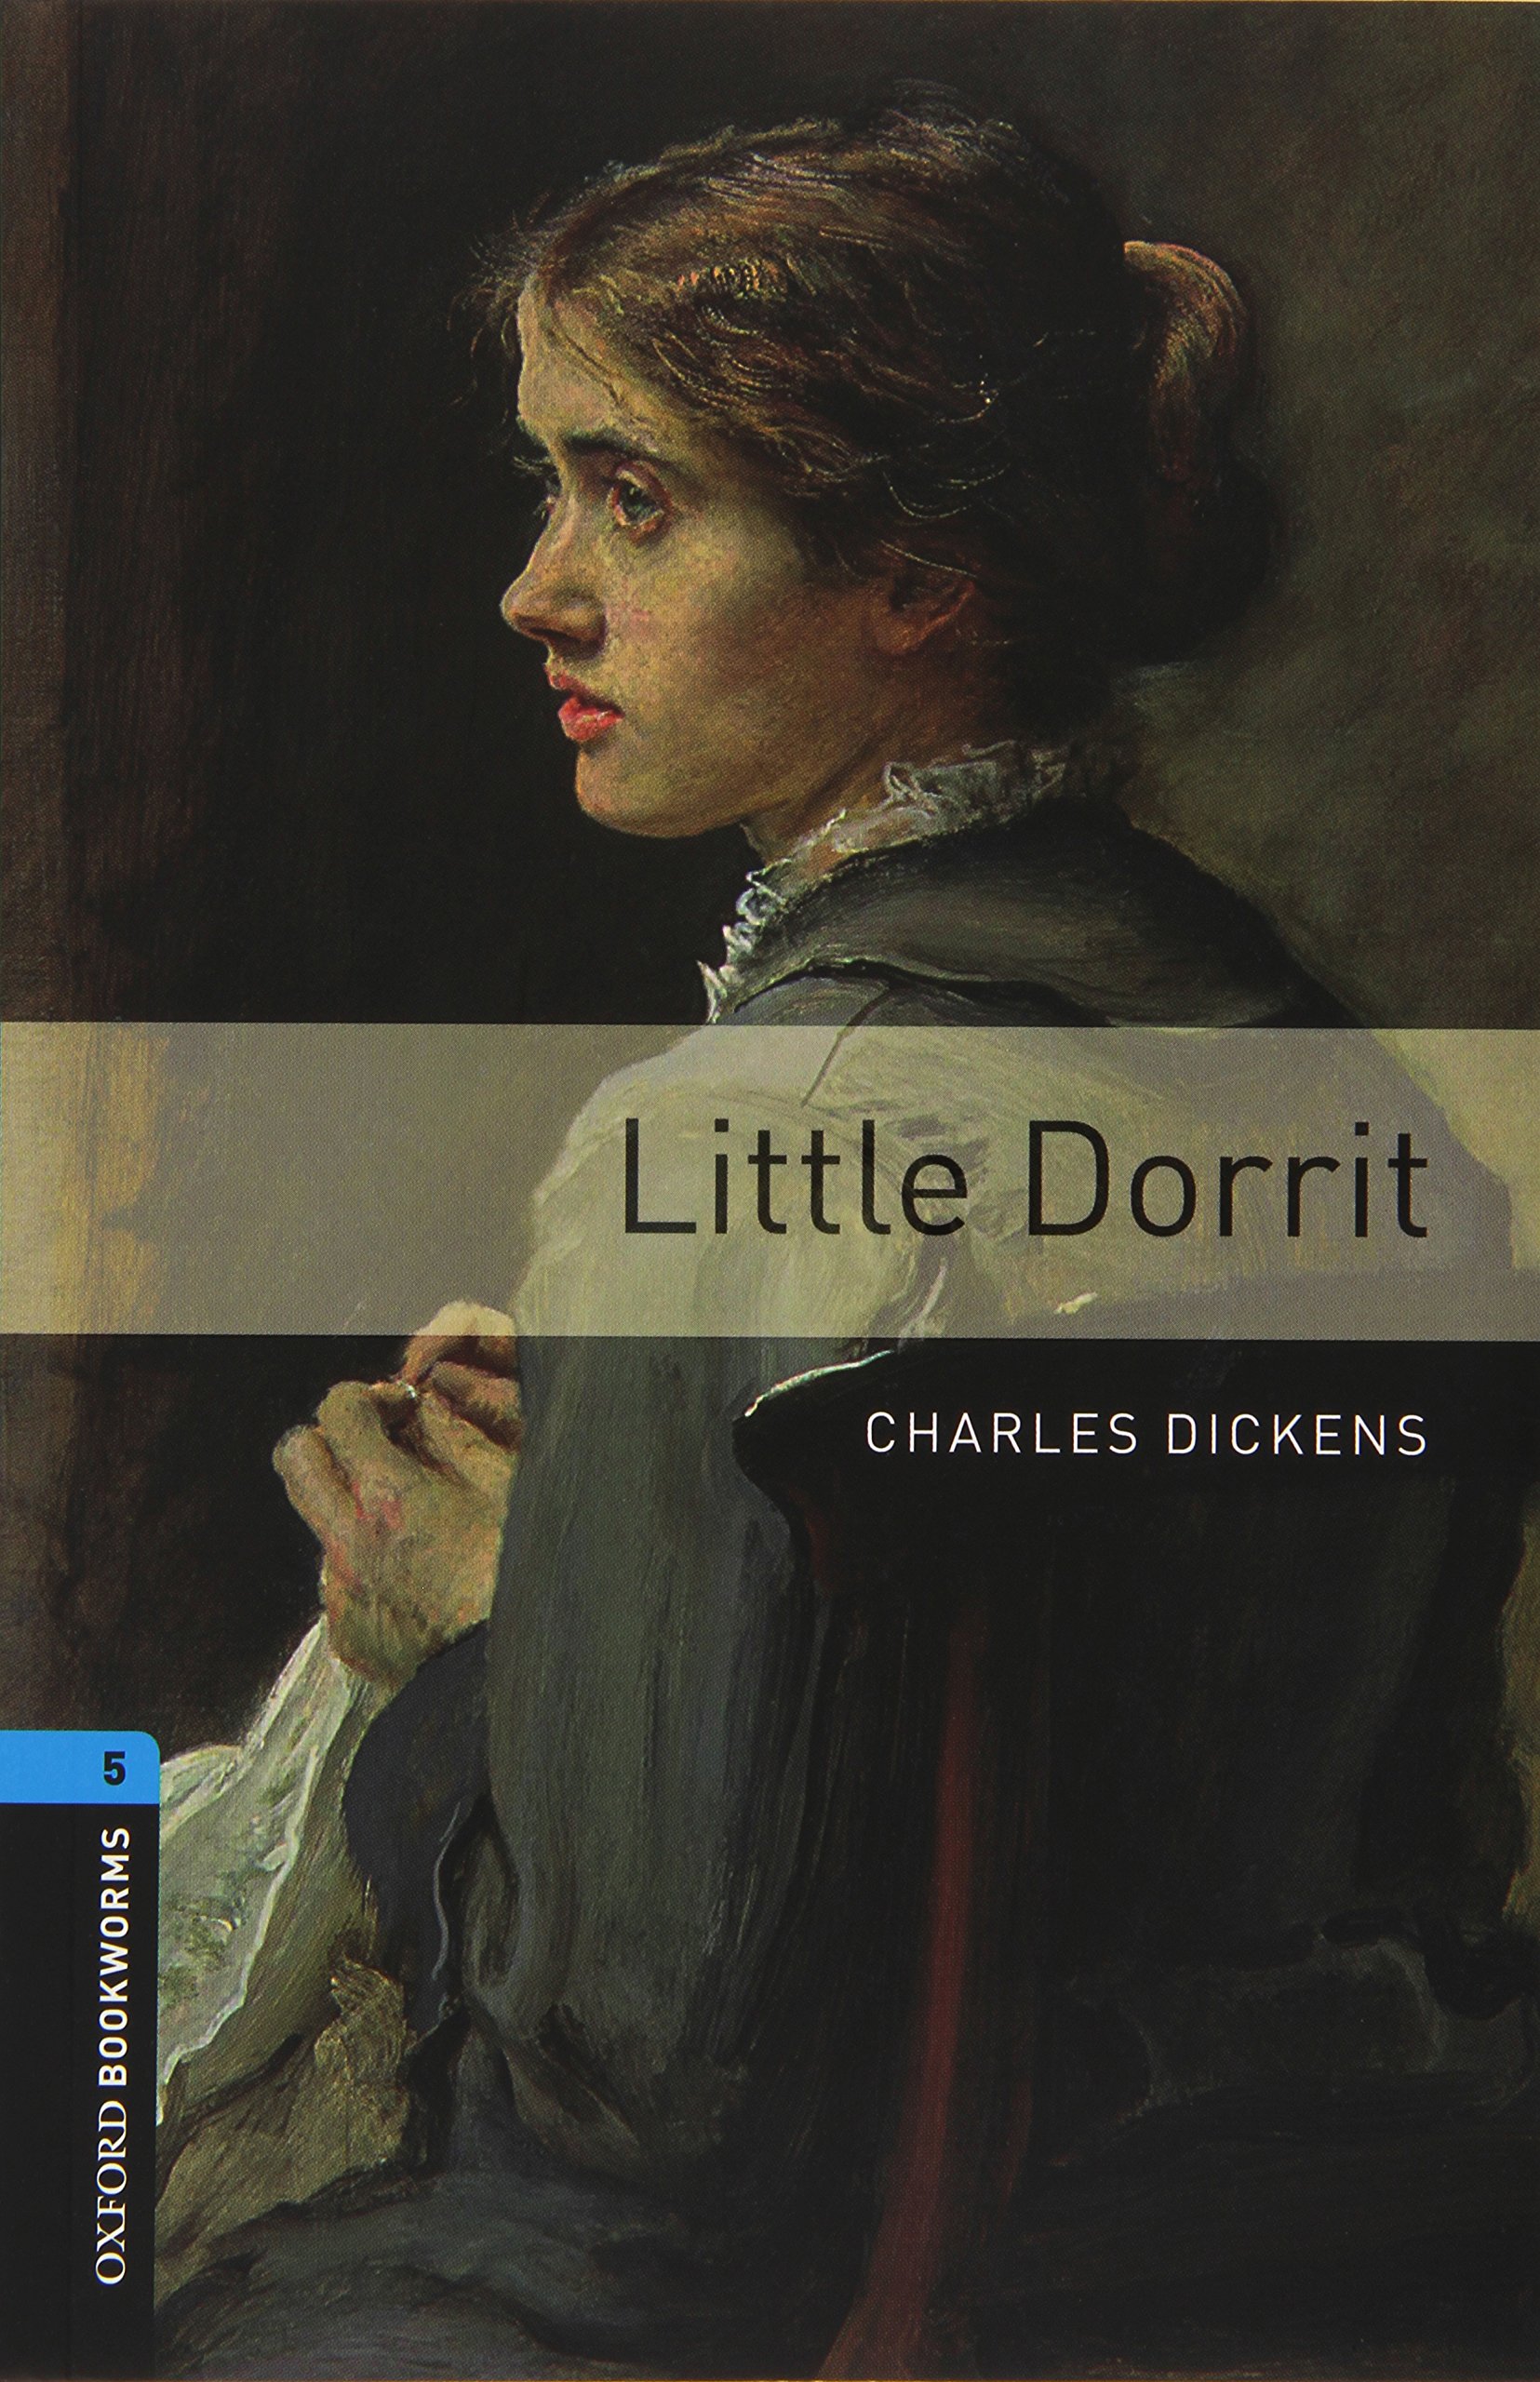 LITTLE DORRIT (OXFORD BOOKWORMS LIBRARY, LEVEL 5) Book + Download Audio